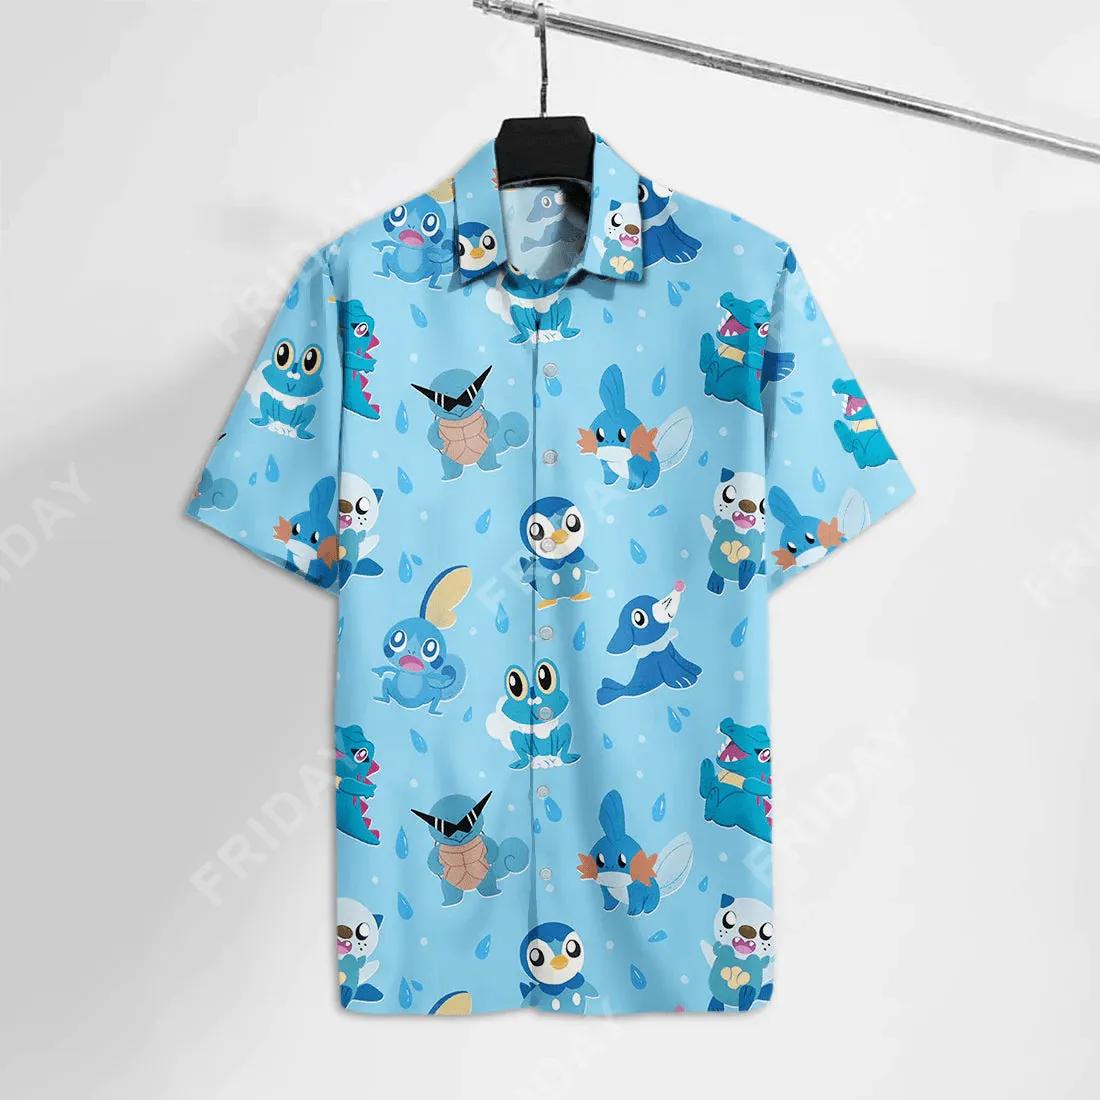 Popular Pokemon Hawaiian Shirt Water Pokemon Oshawott Squirtle Totodile Pattern Blue 1